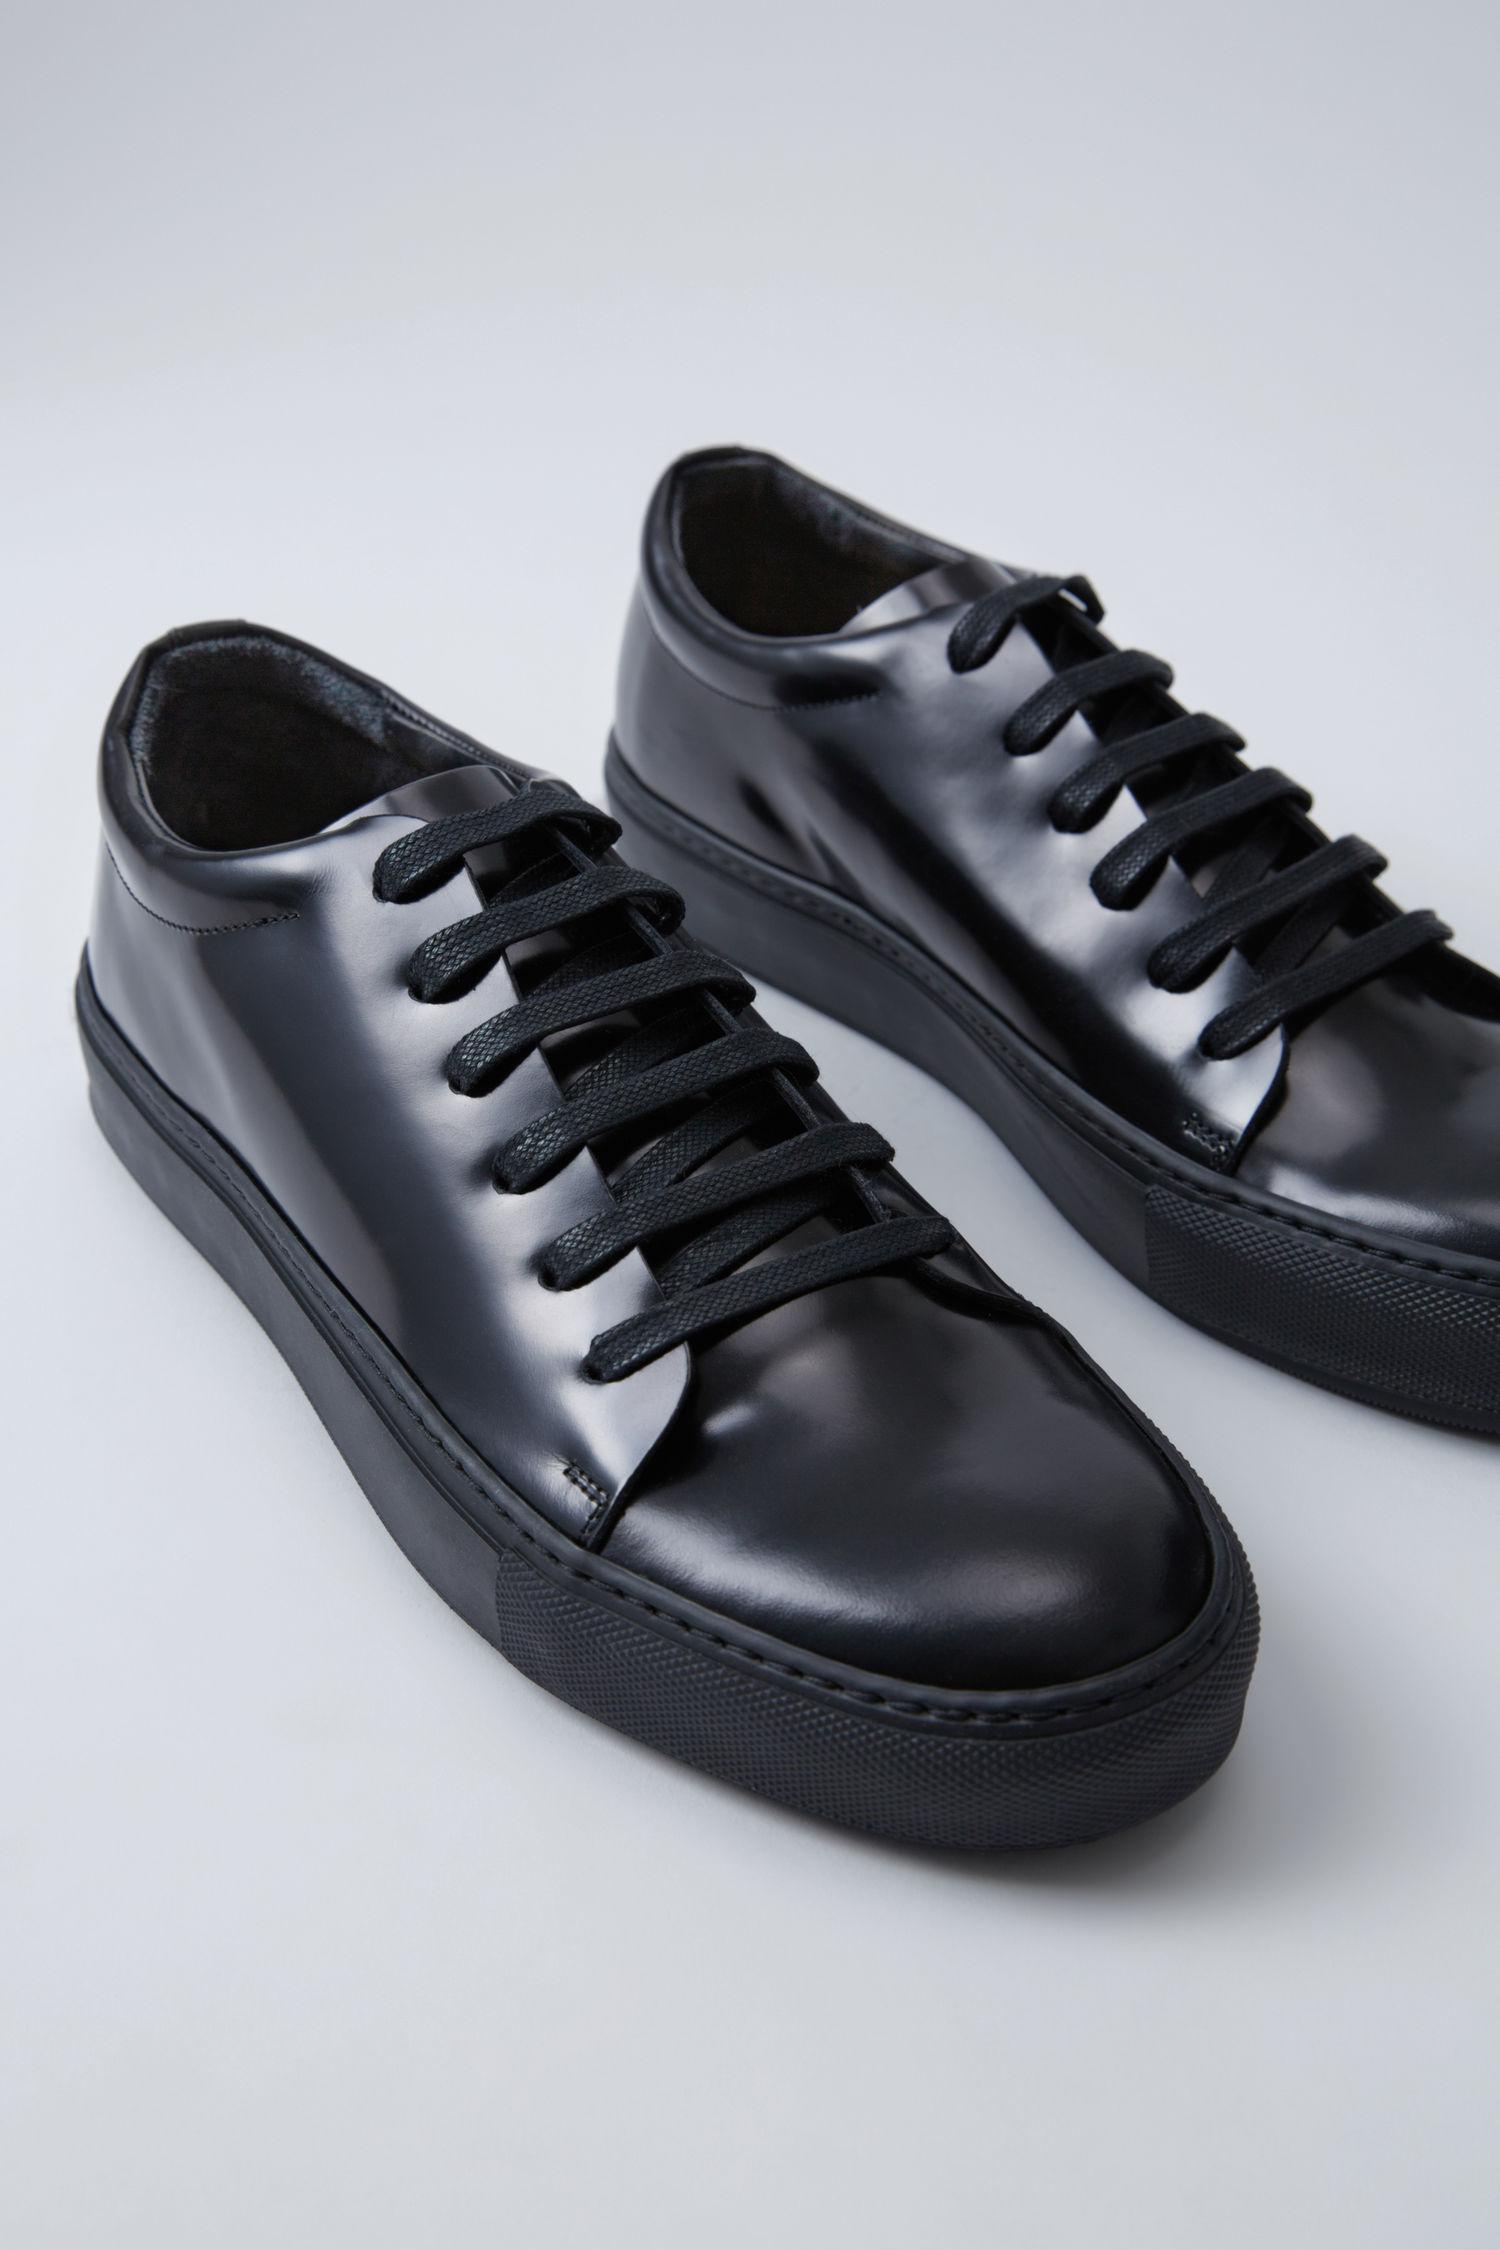 Acne Studios Leather Adrian Sneakers in 